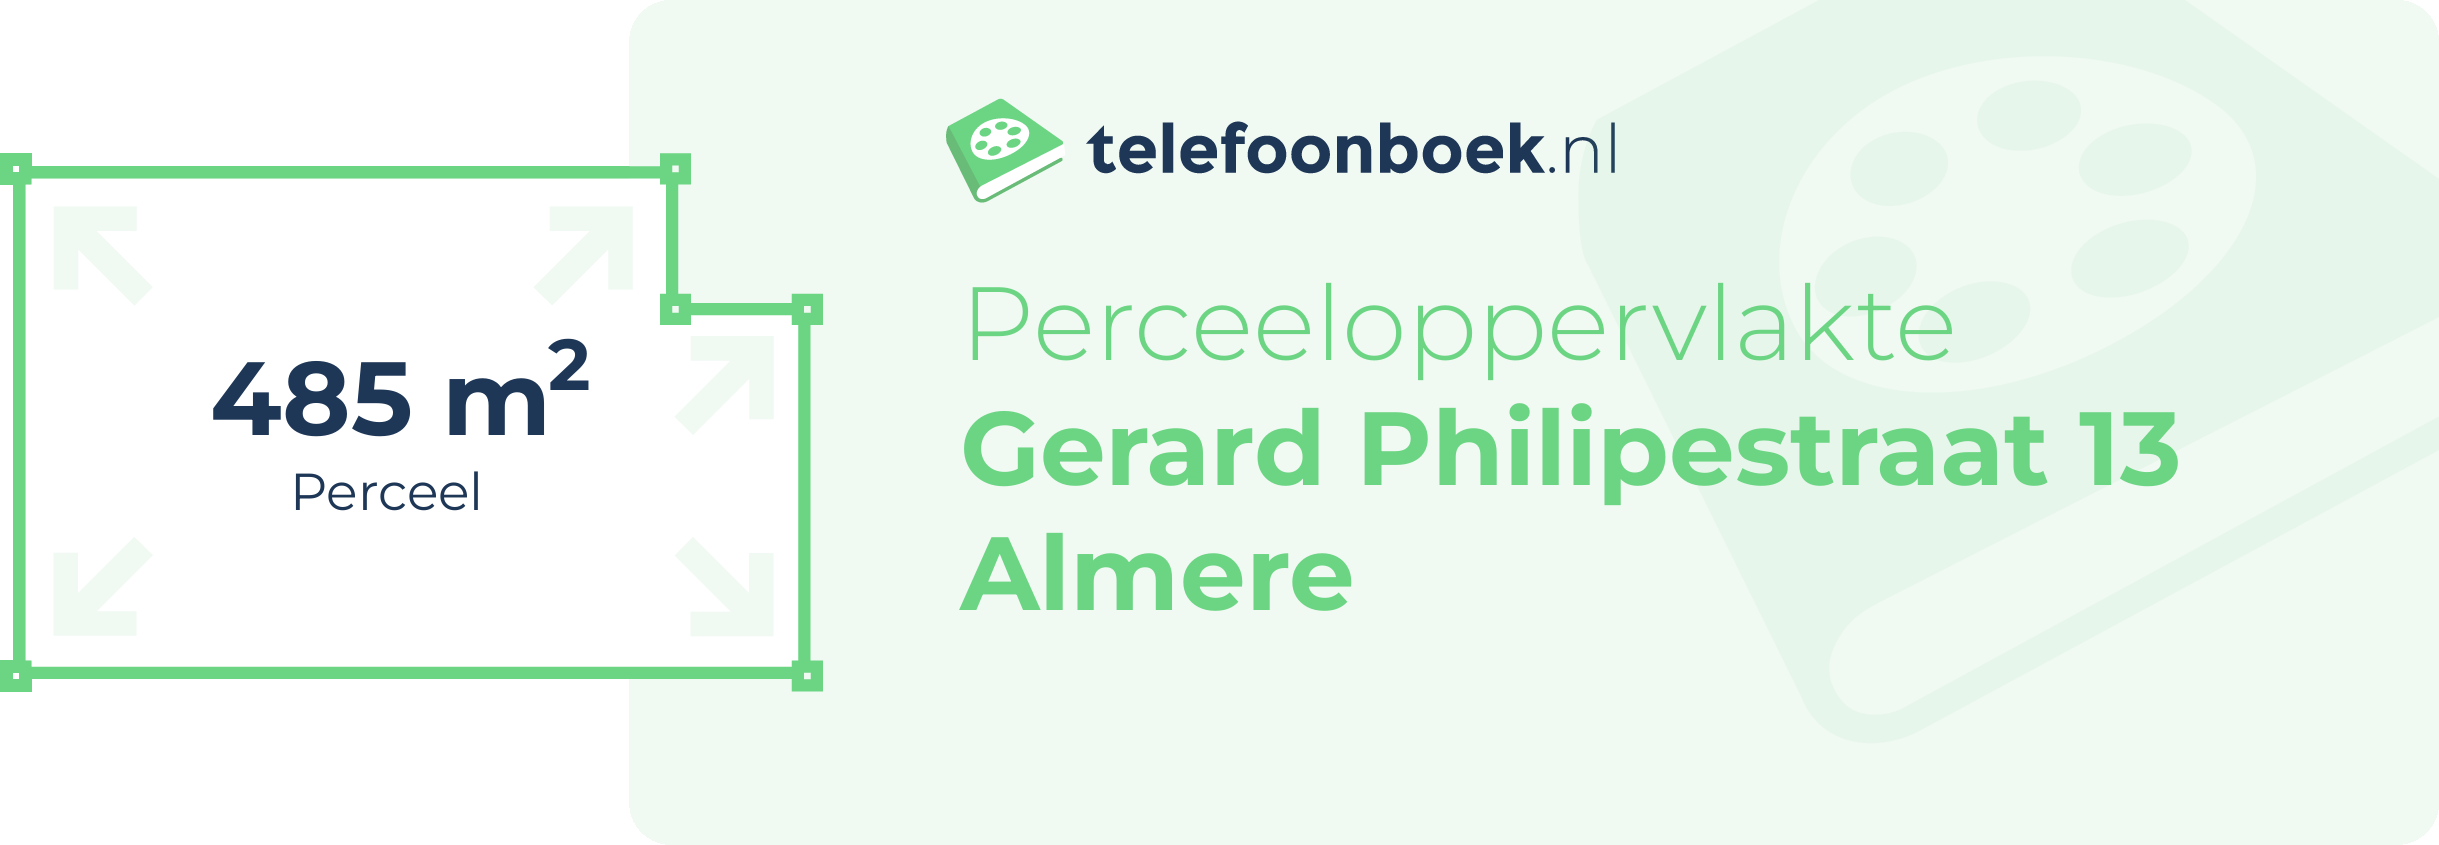 Perceeloppervlakte Gerard Philipestraat 13 Almere